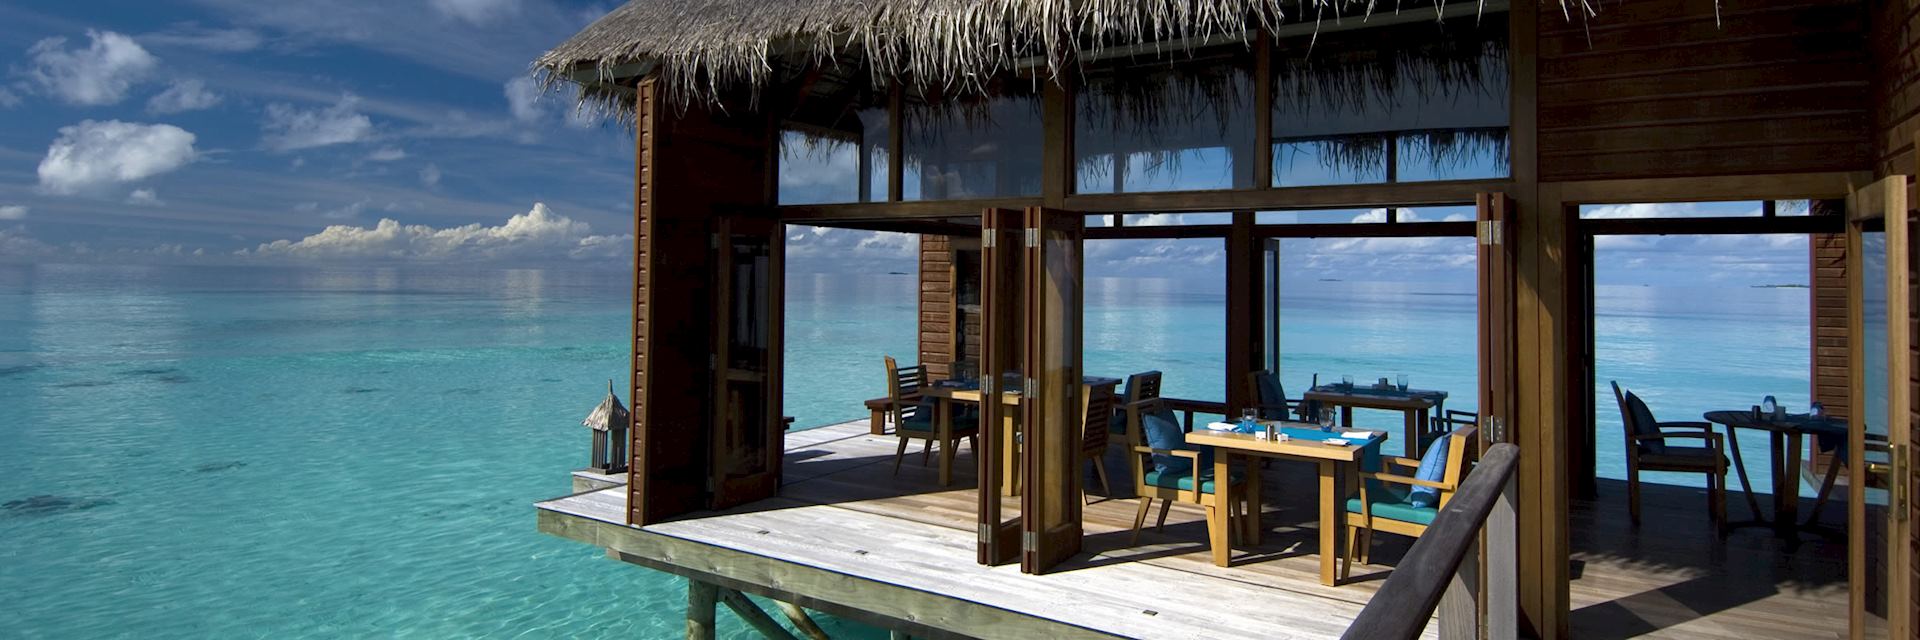 The overwater restaurant at the Conrad Maldives Rangali Island, Maldives